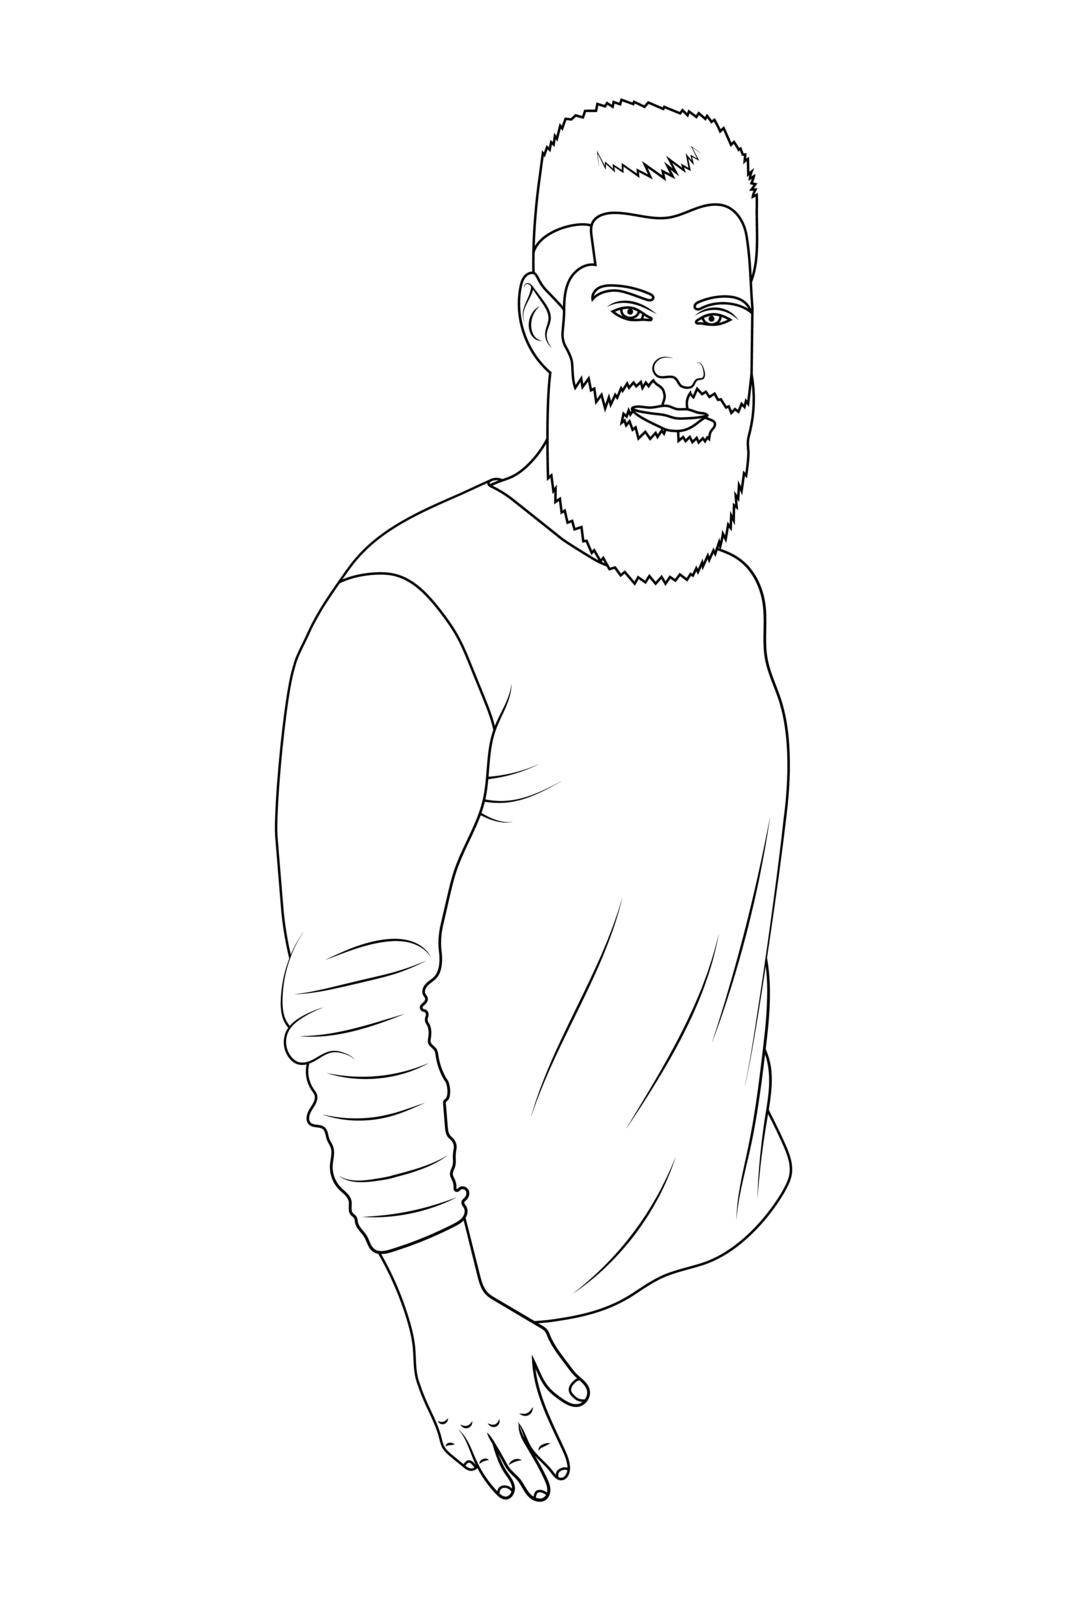 Man body with a beard sketch illustration. by vas_evg